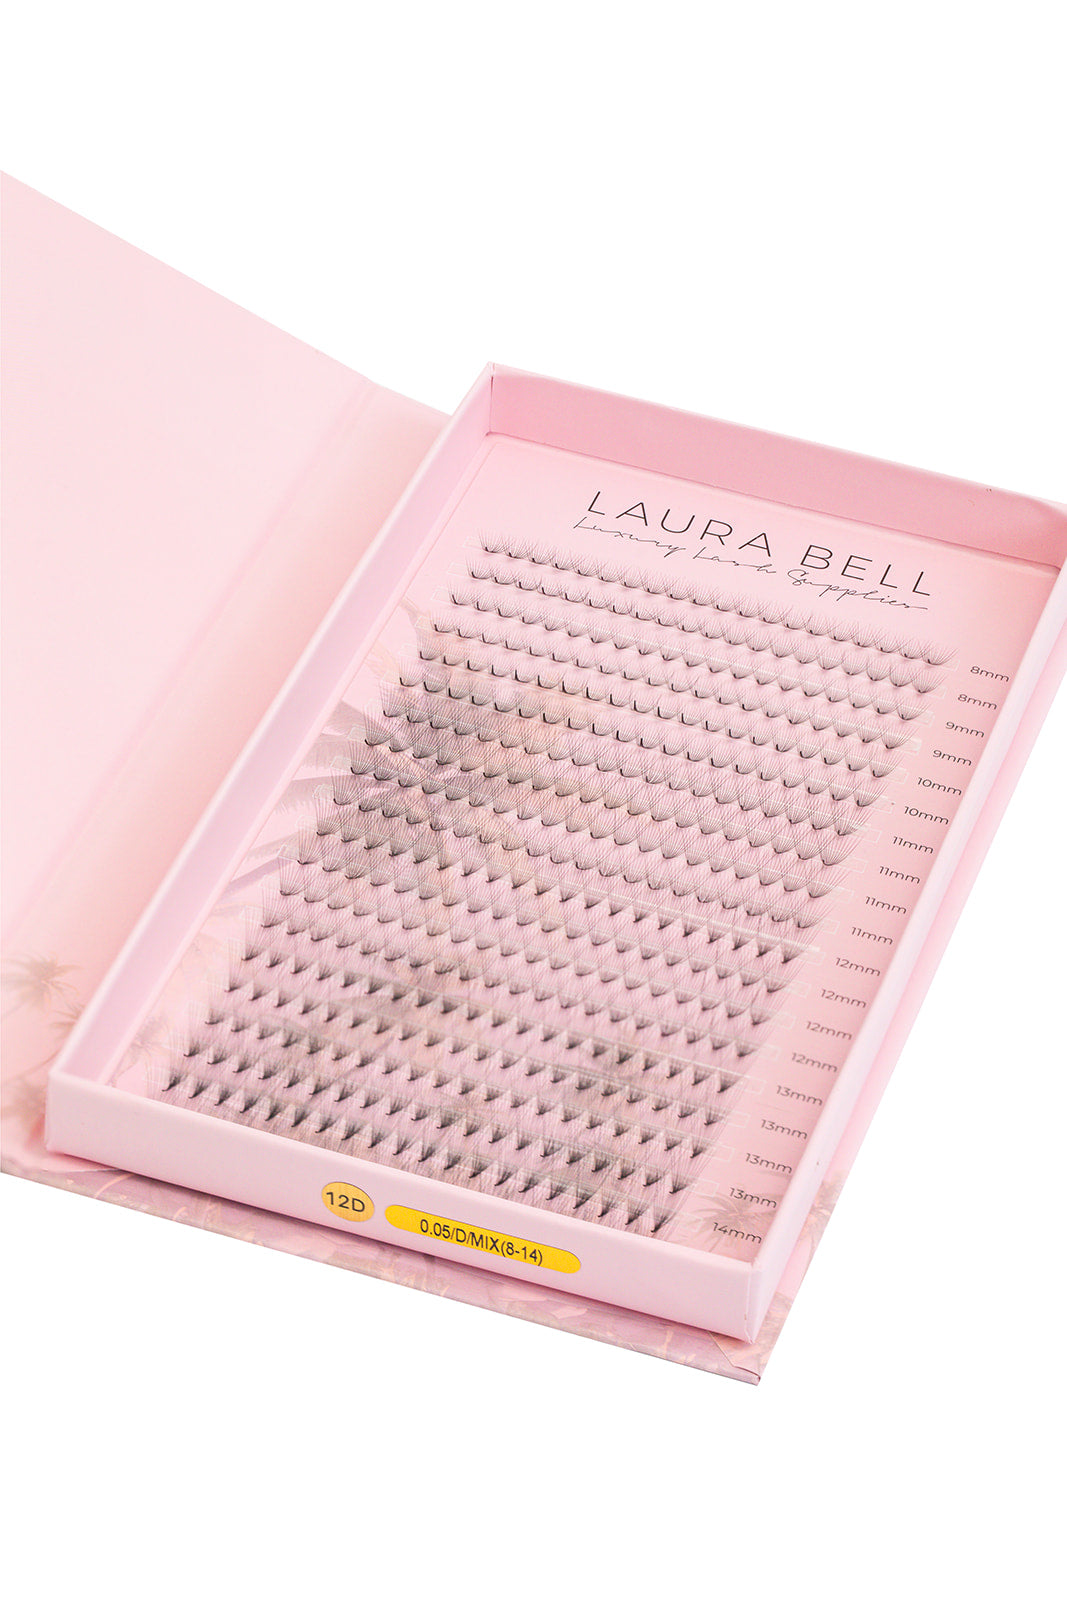 12D Premade Volume Fans (400 Fans) - Laura Bell Luxury Lash Supplies